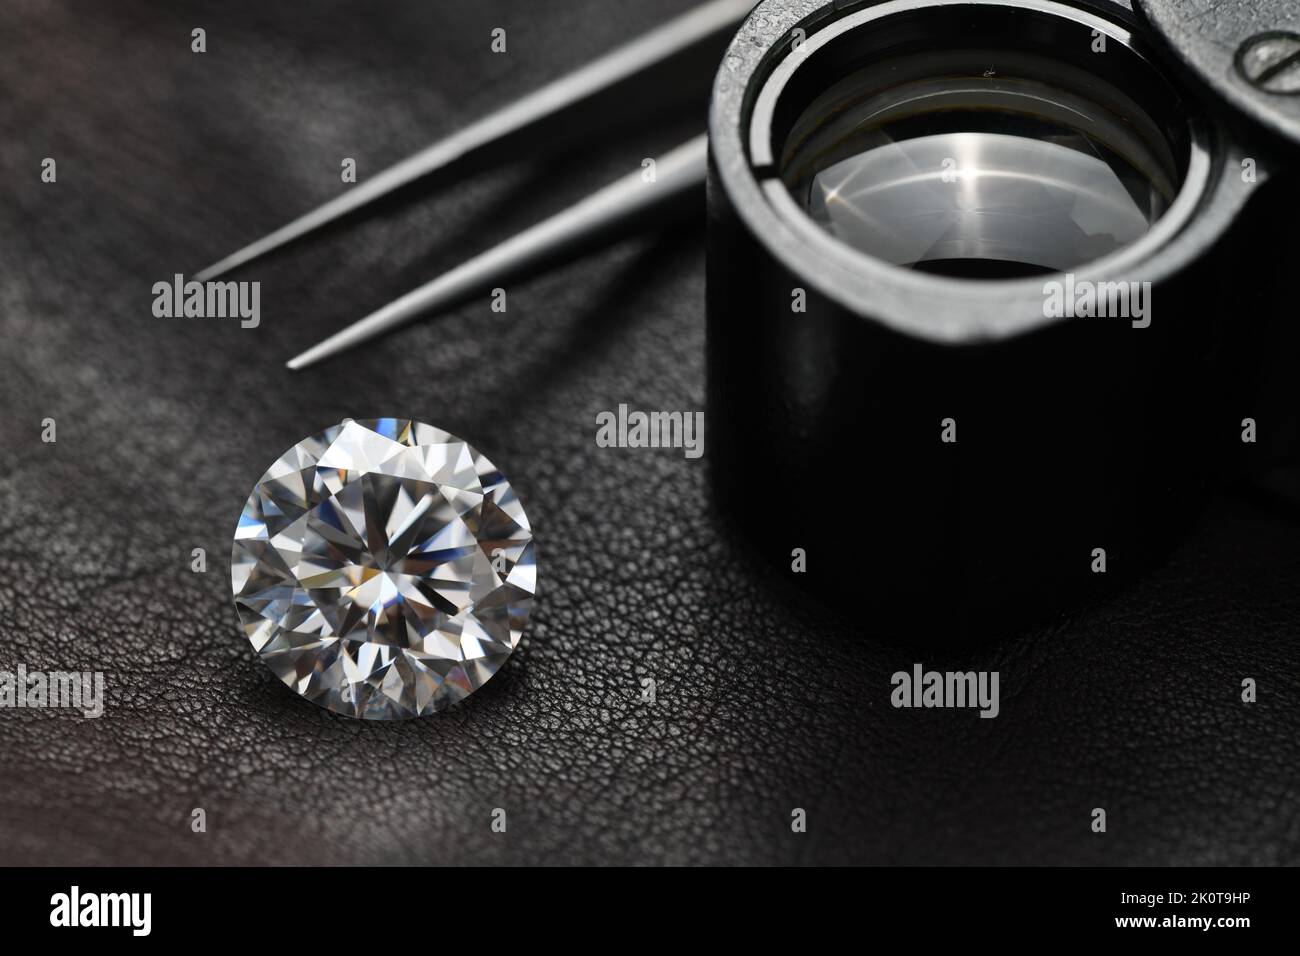 Round Cut Precious Diamonds on Leather Stock Photo